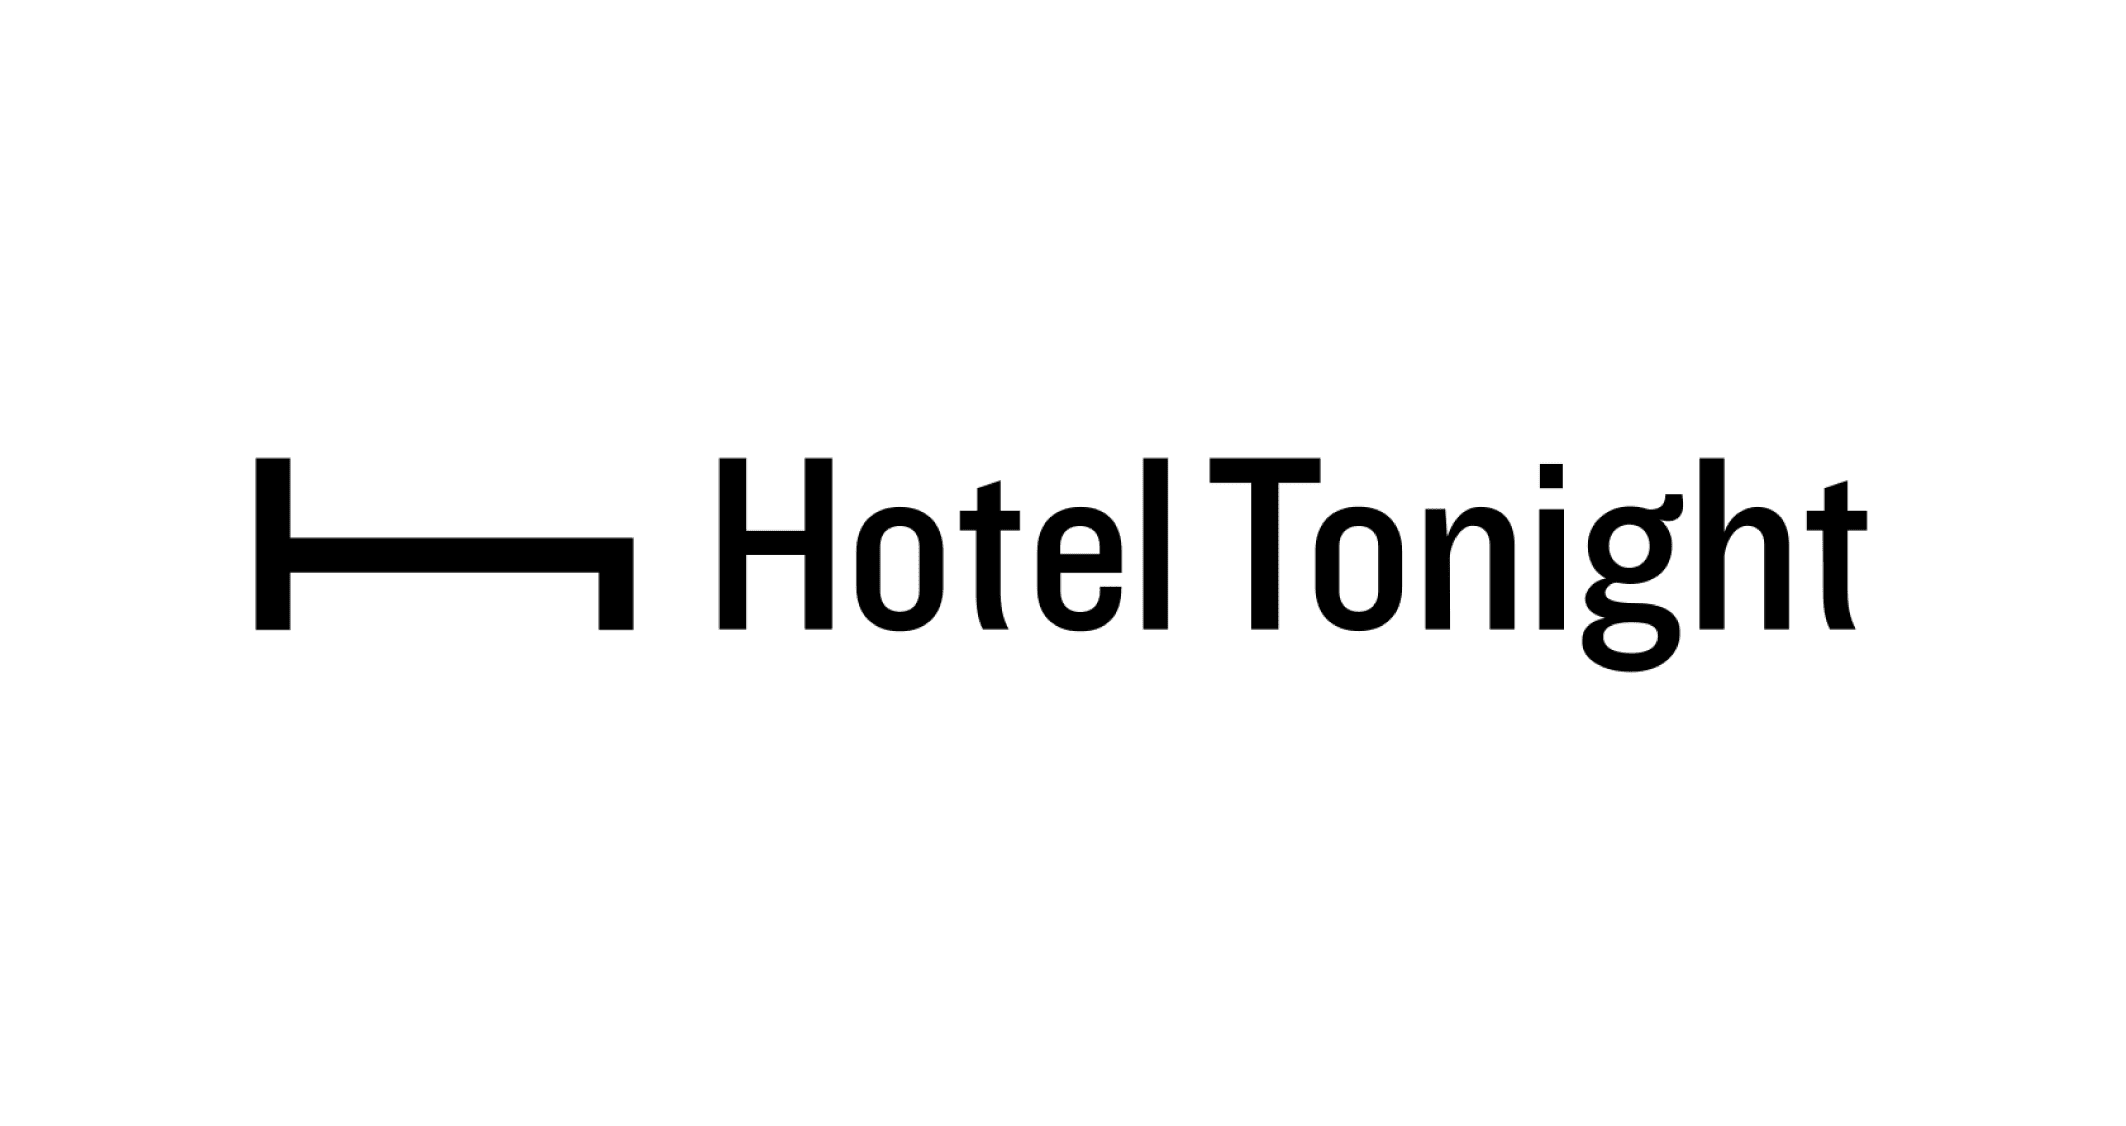 HotelTonight - Battery Ventures